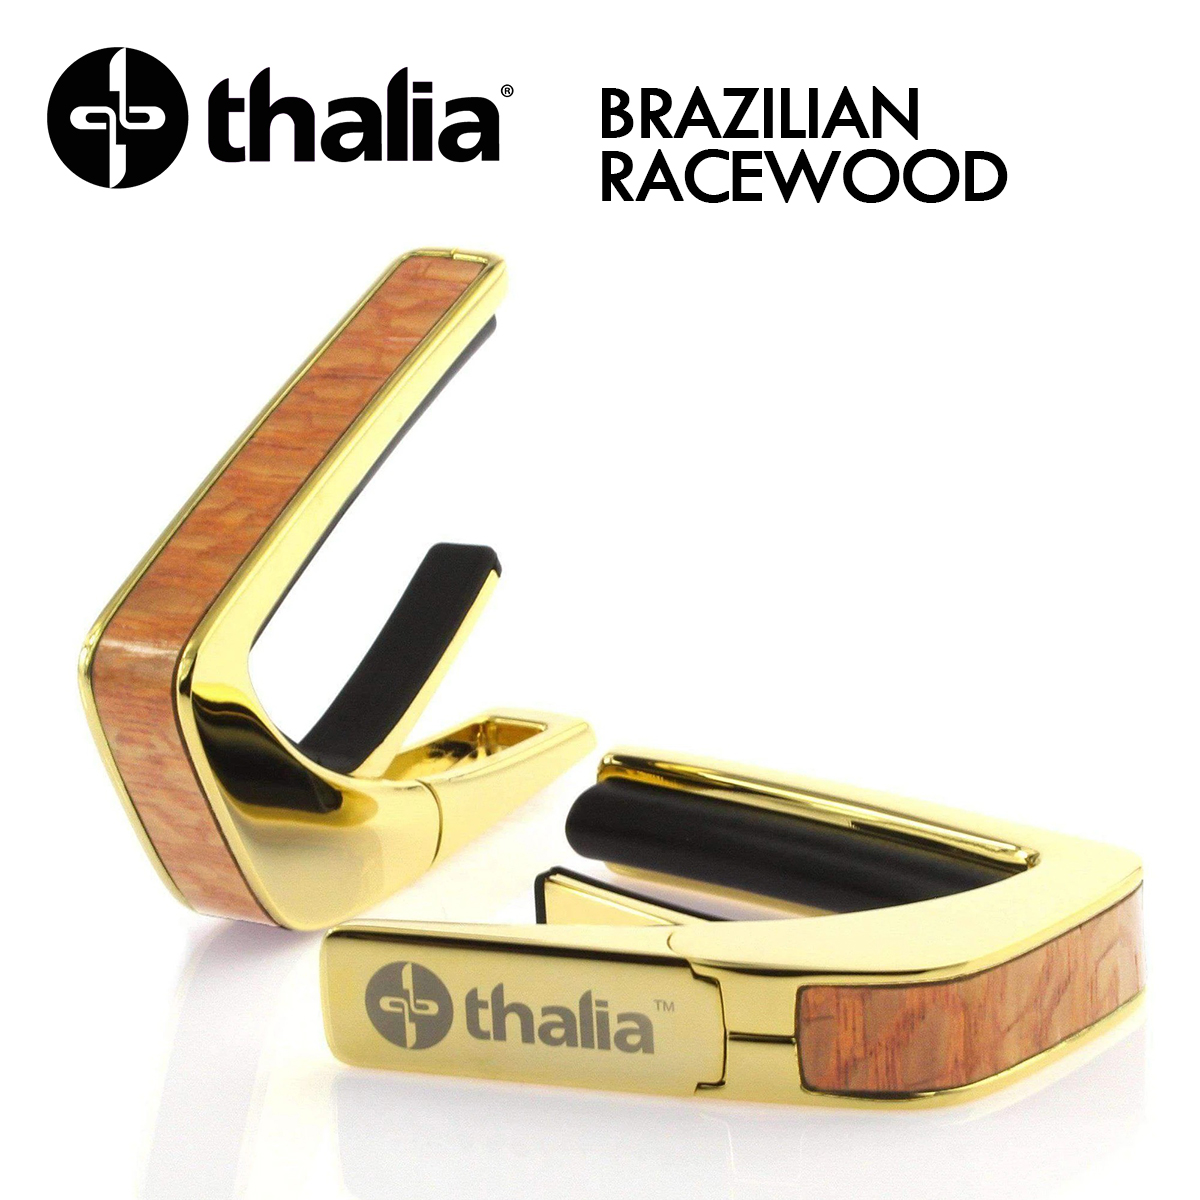 Thalia Capos Exotic Wood Brazilian Racewood 24k Gold 新品 ギター用カポタスト タリア ゴールド 金 Electric Acoustic Bass Guitar 公取委は19年6月 価格は量産グレードが Diasaonline Com